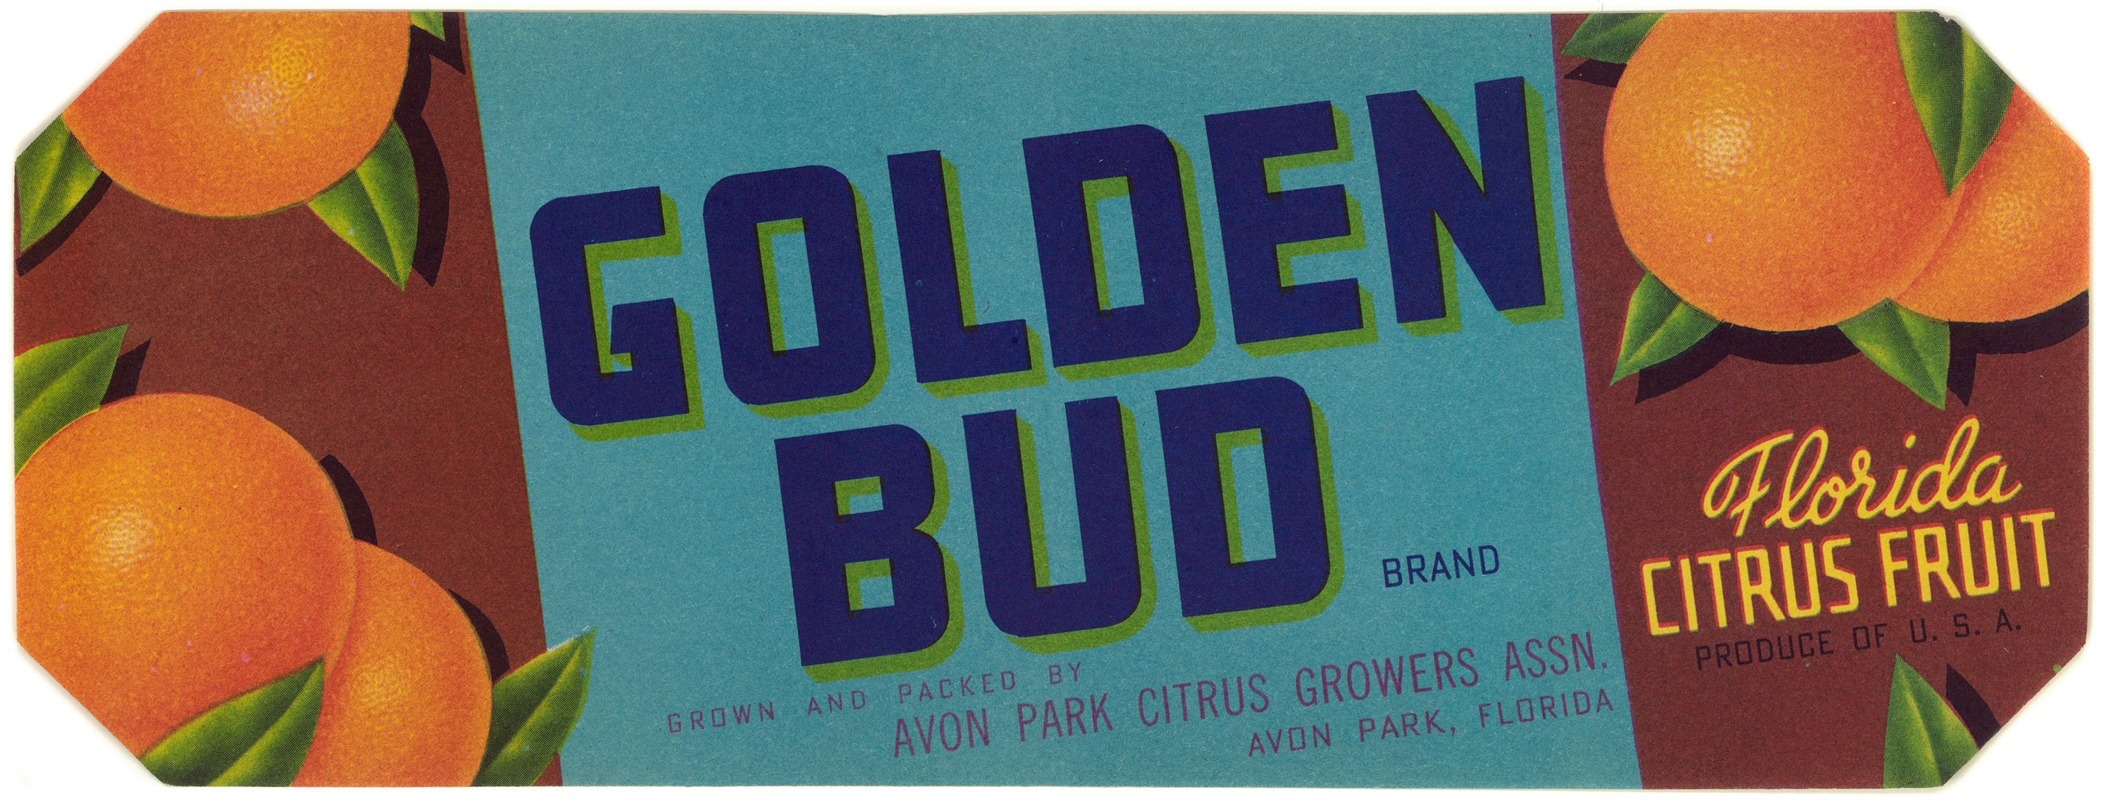 Anonymous - Golden Bud Brand Citrus Label